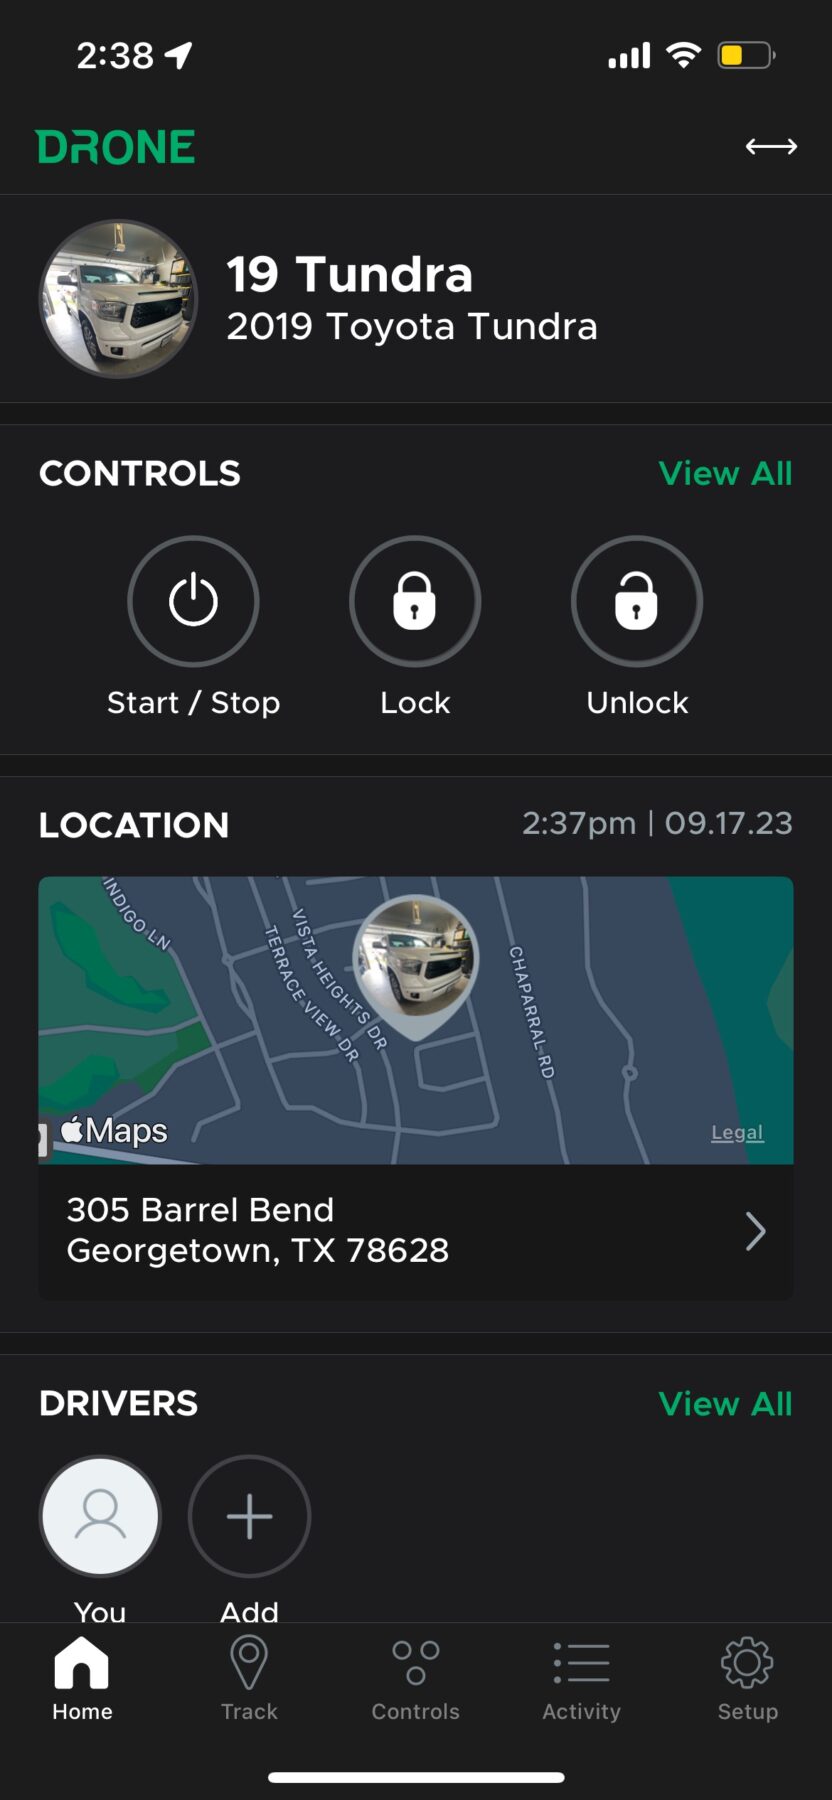 Drone Mobile App homescreen 1